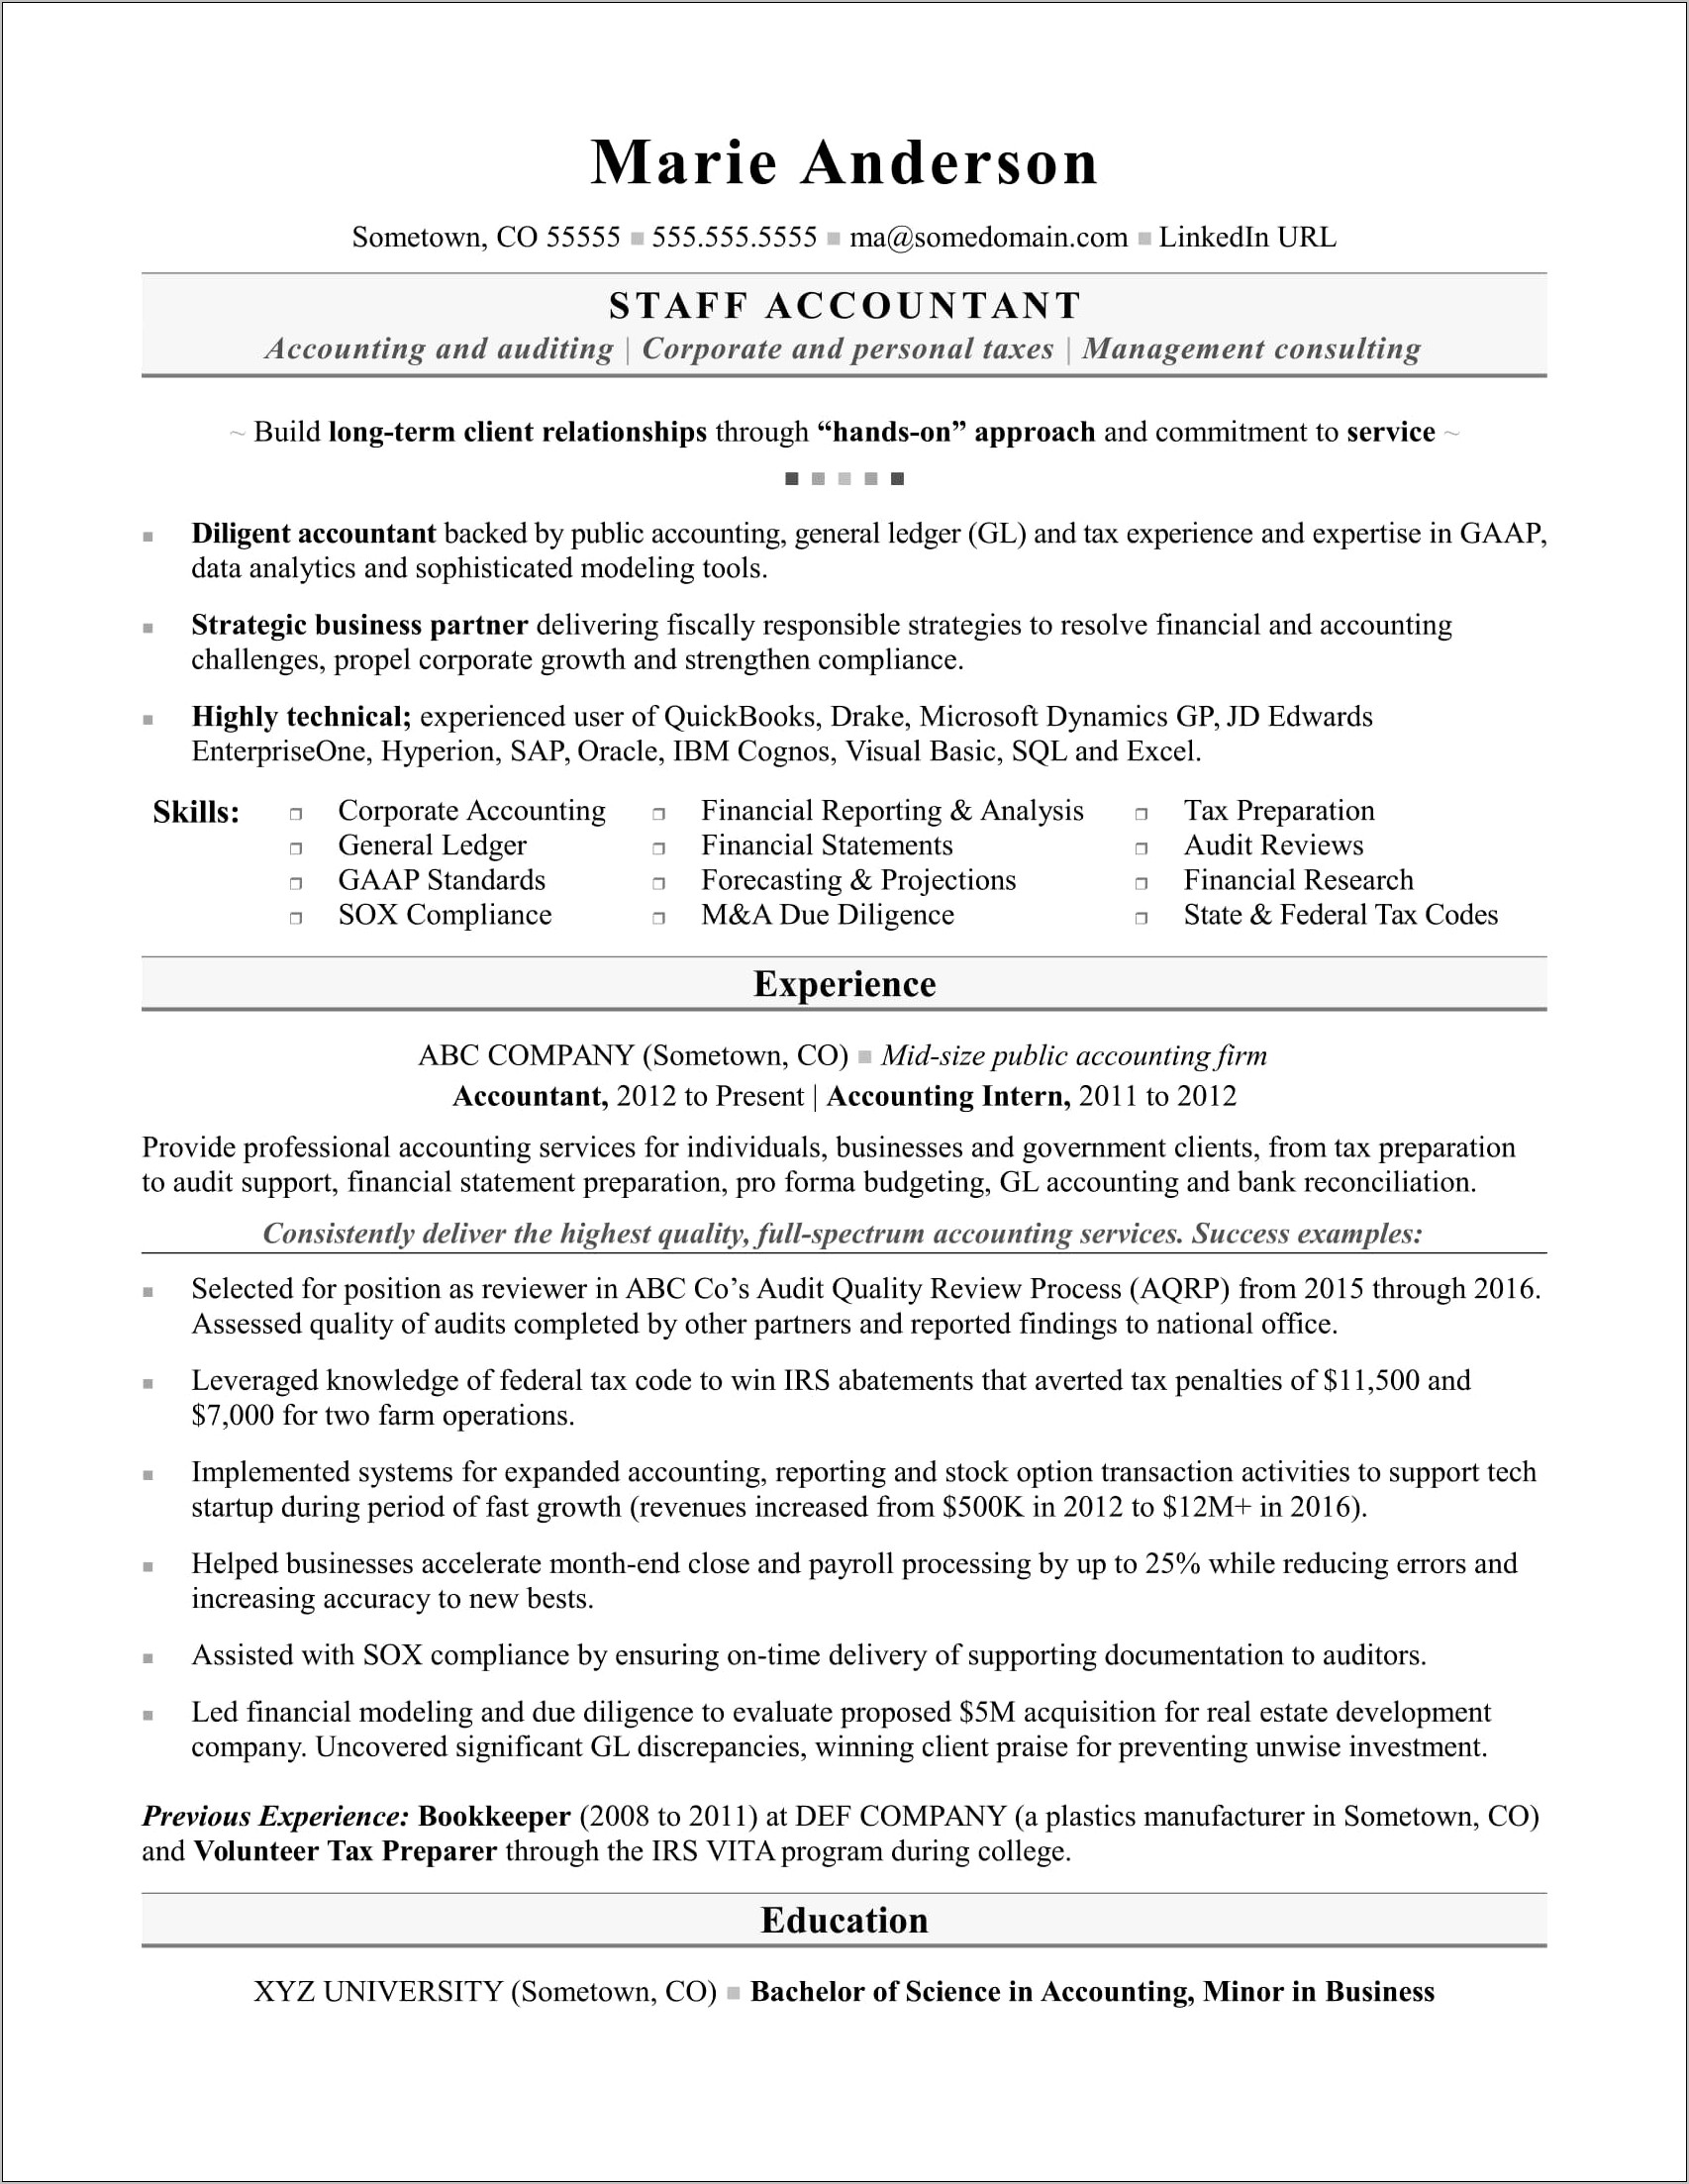 Example Of Tax Accountant Resume Job Description